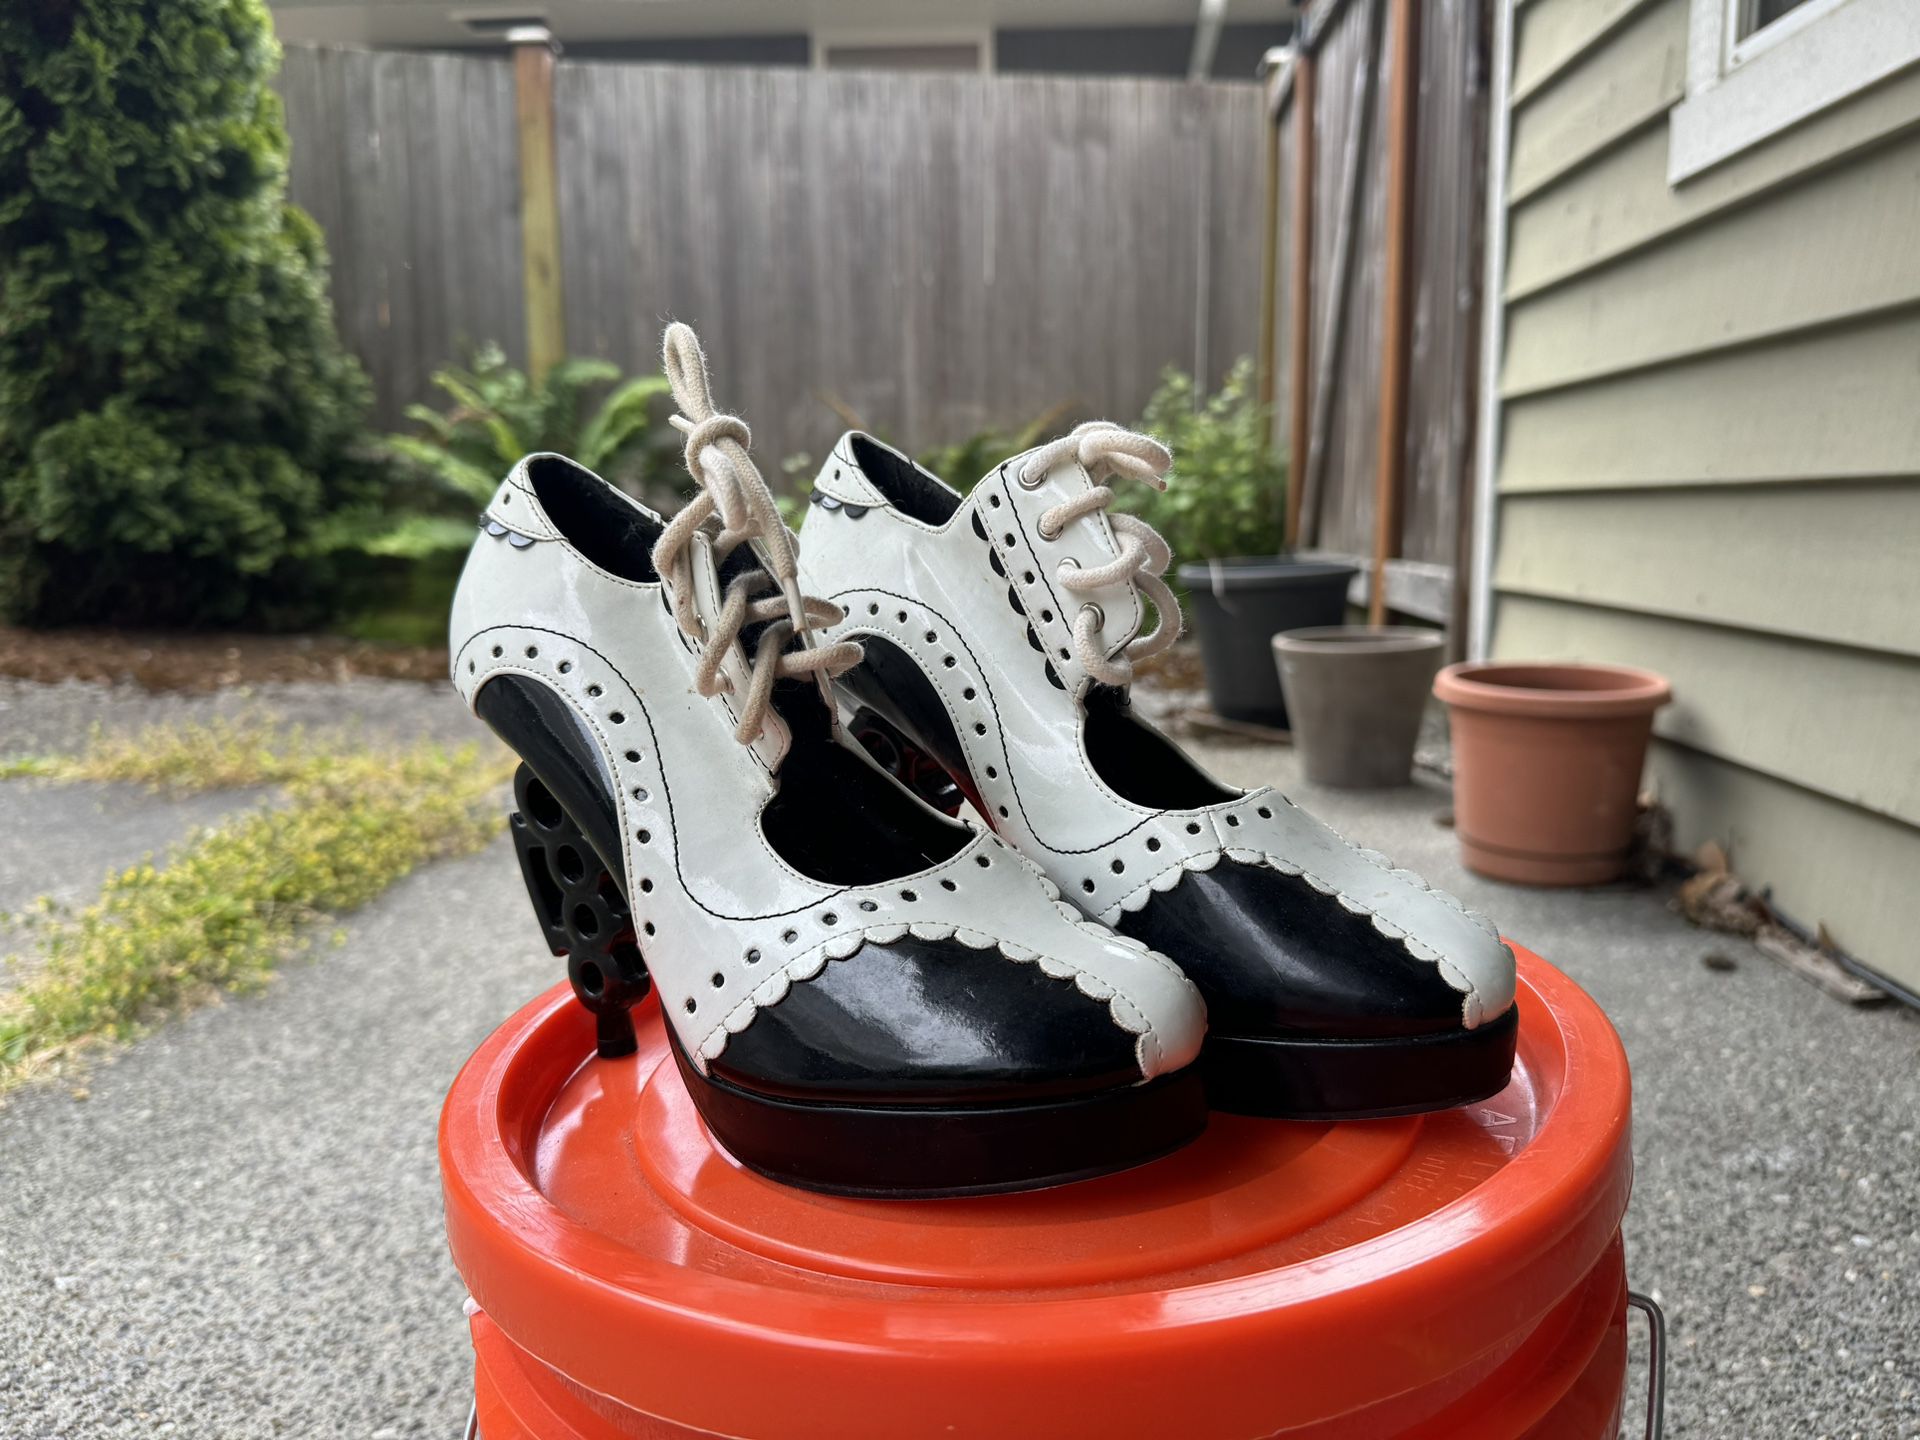 Women’s Punk High heel Shoes - Size 9?